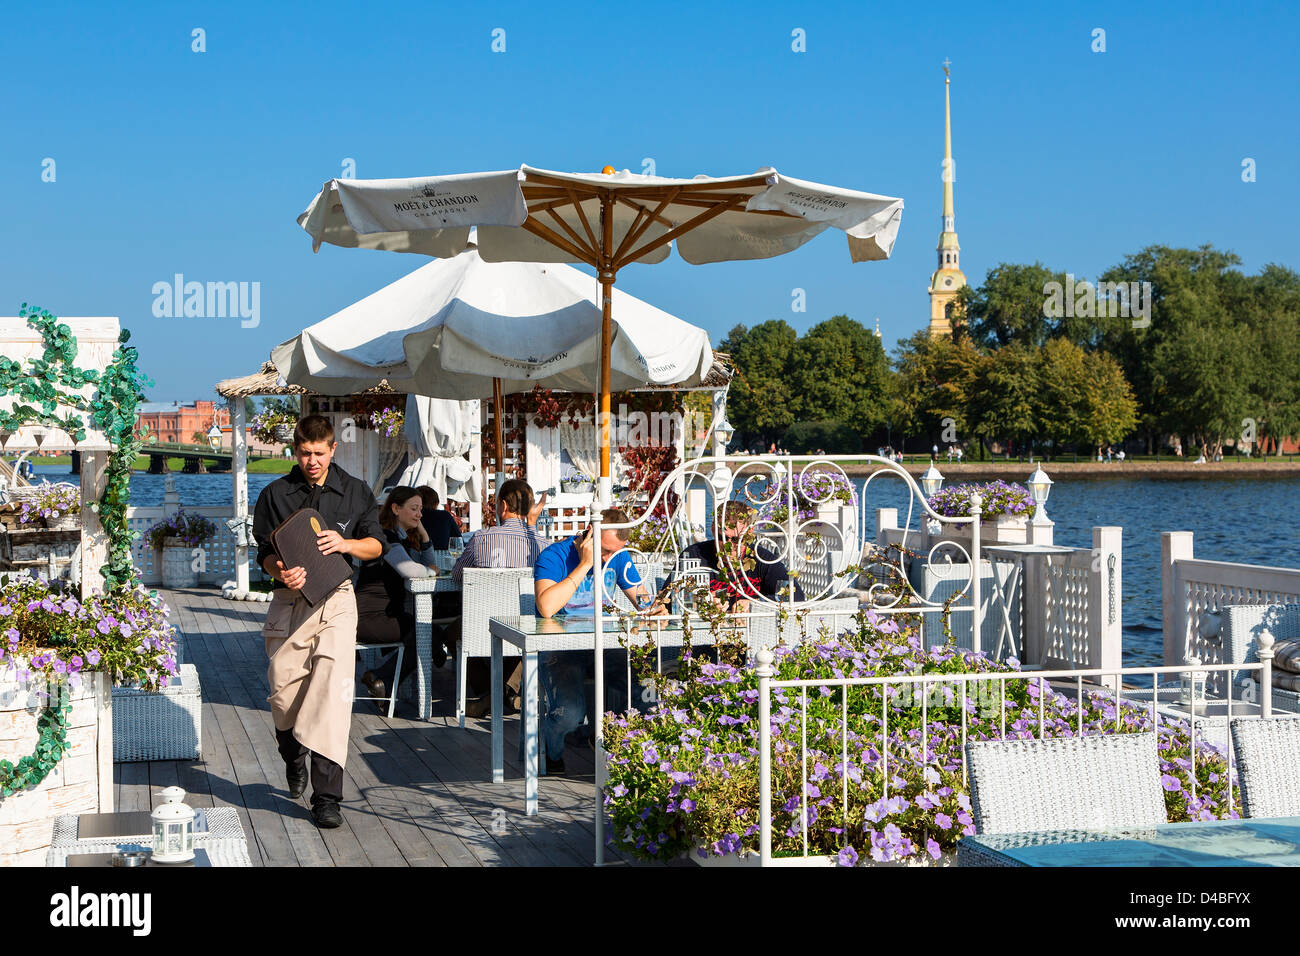 St. Petersburg, Terrace of the Flying Dutchman Restaurant Stock Photo